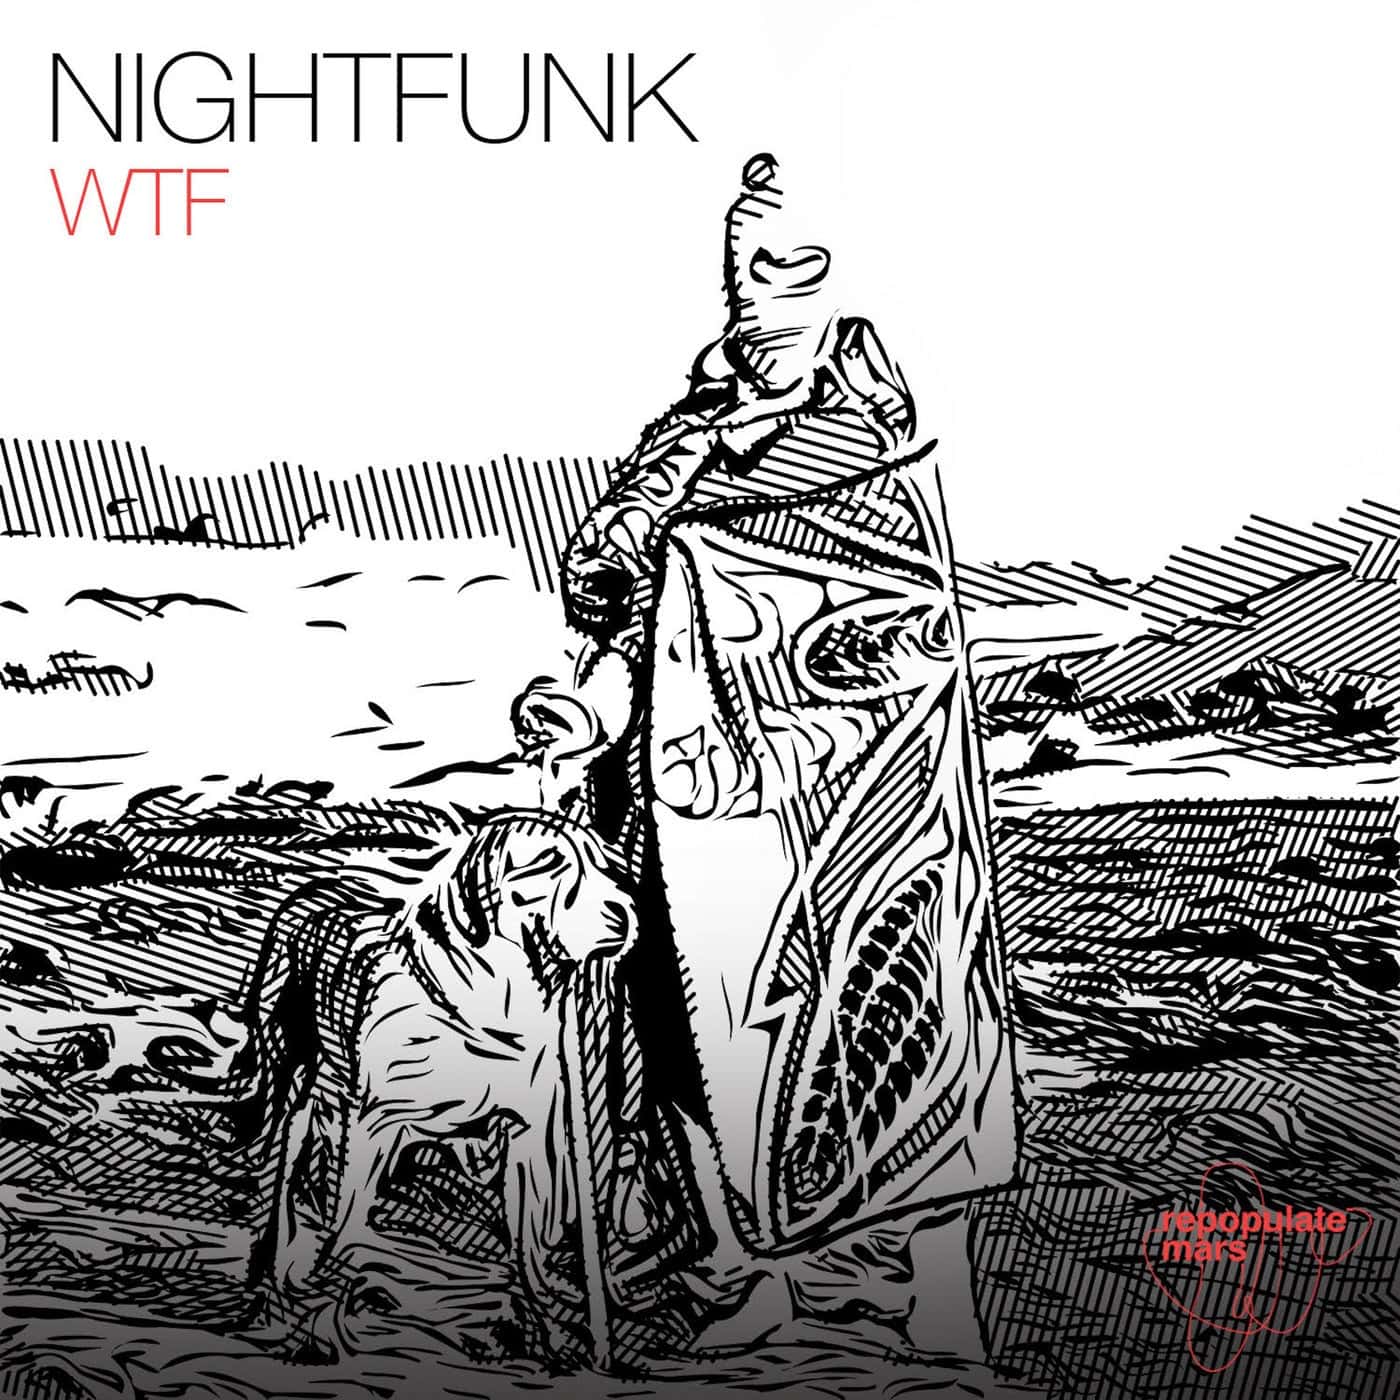 Download NightFunk - WTF on Electrobuzz